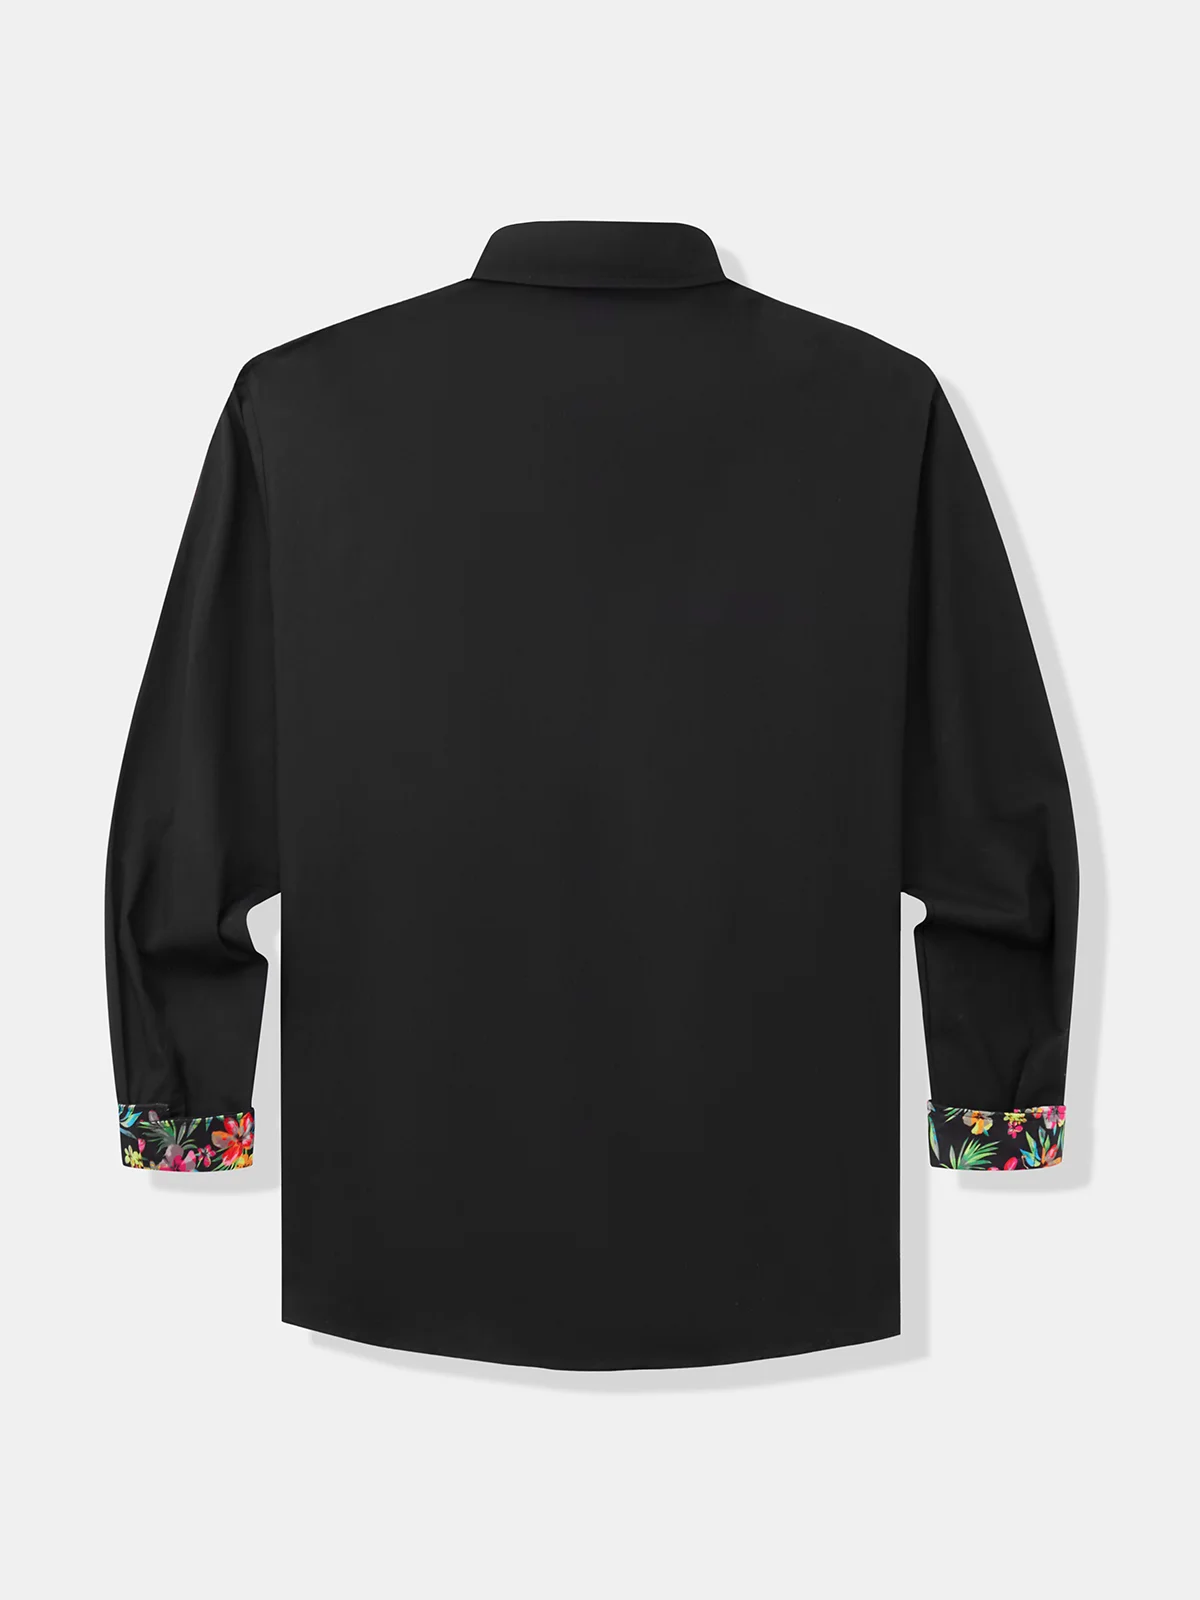 Hardaddy Cotton Plain Paneled Floral Long Sleeve Casual Shirt